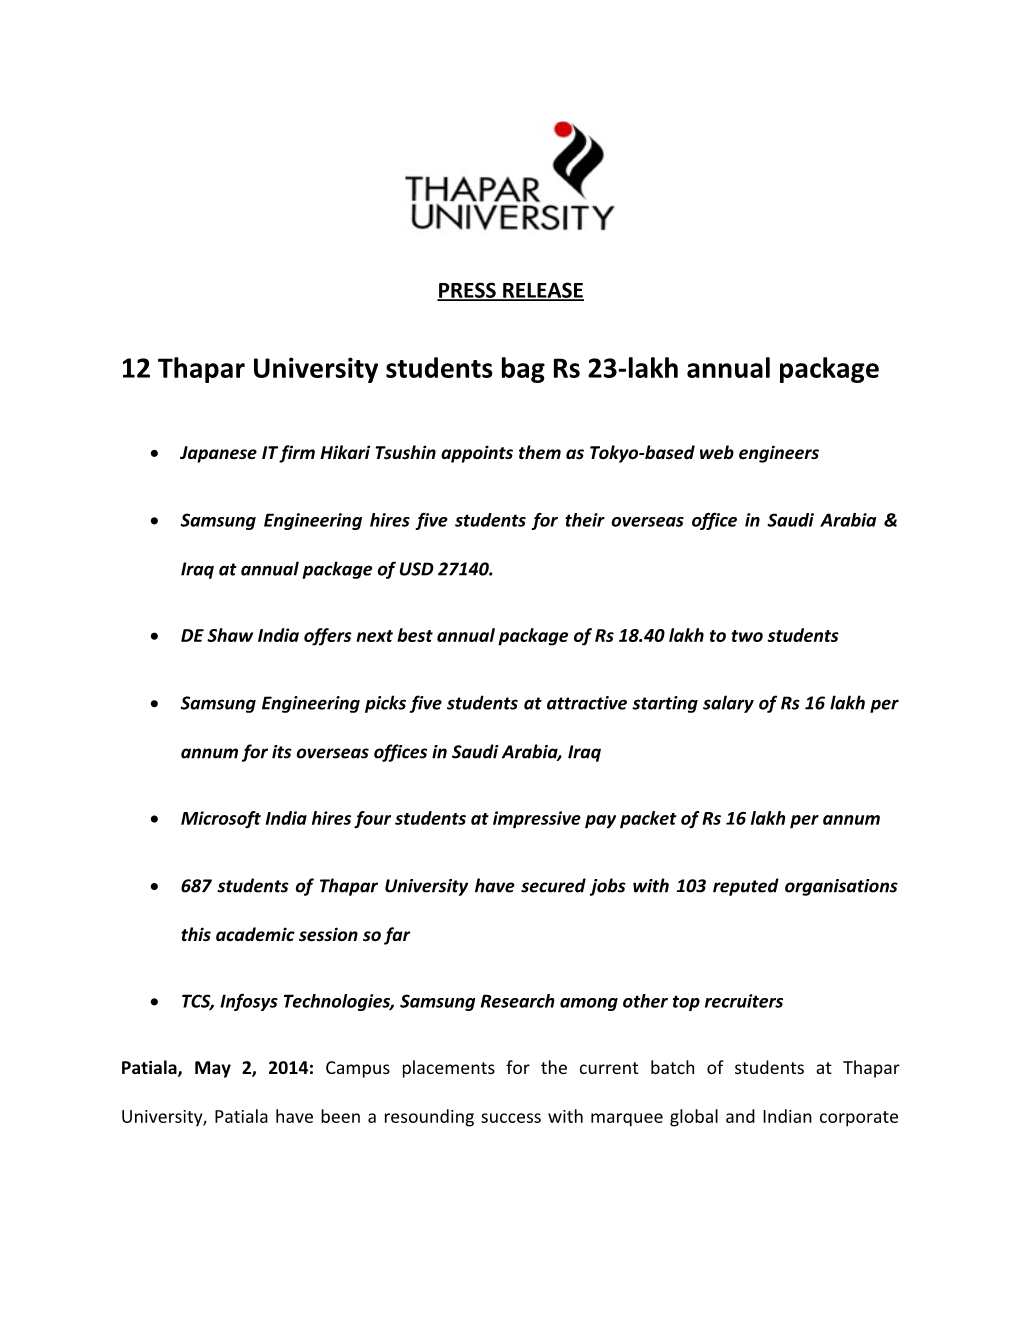 12 Thapar University Students Bag Rs 23-Lakh Annual Package